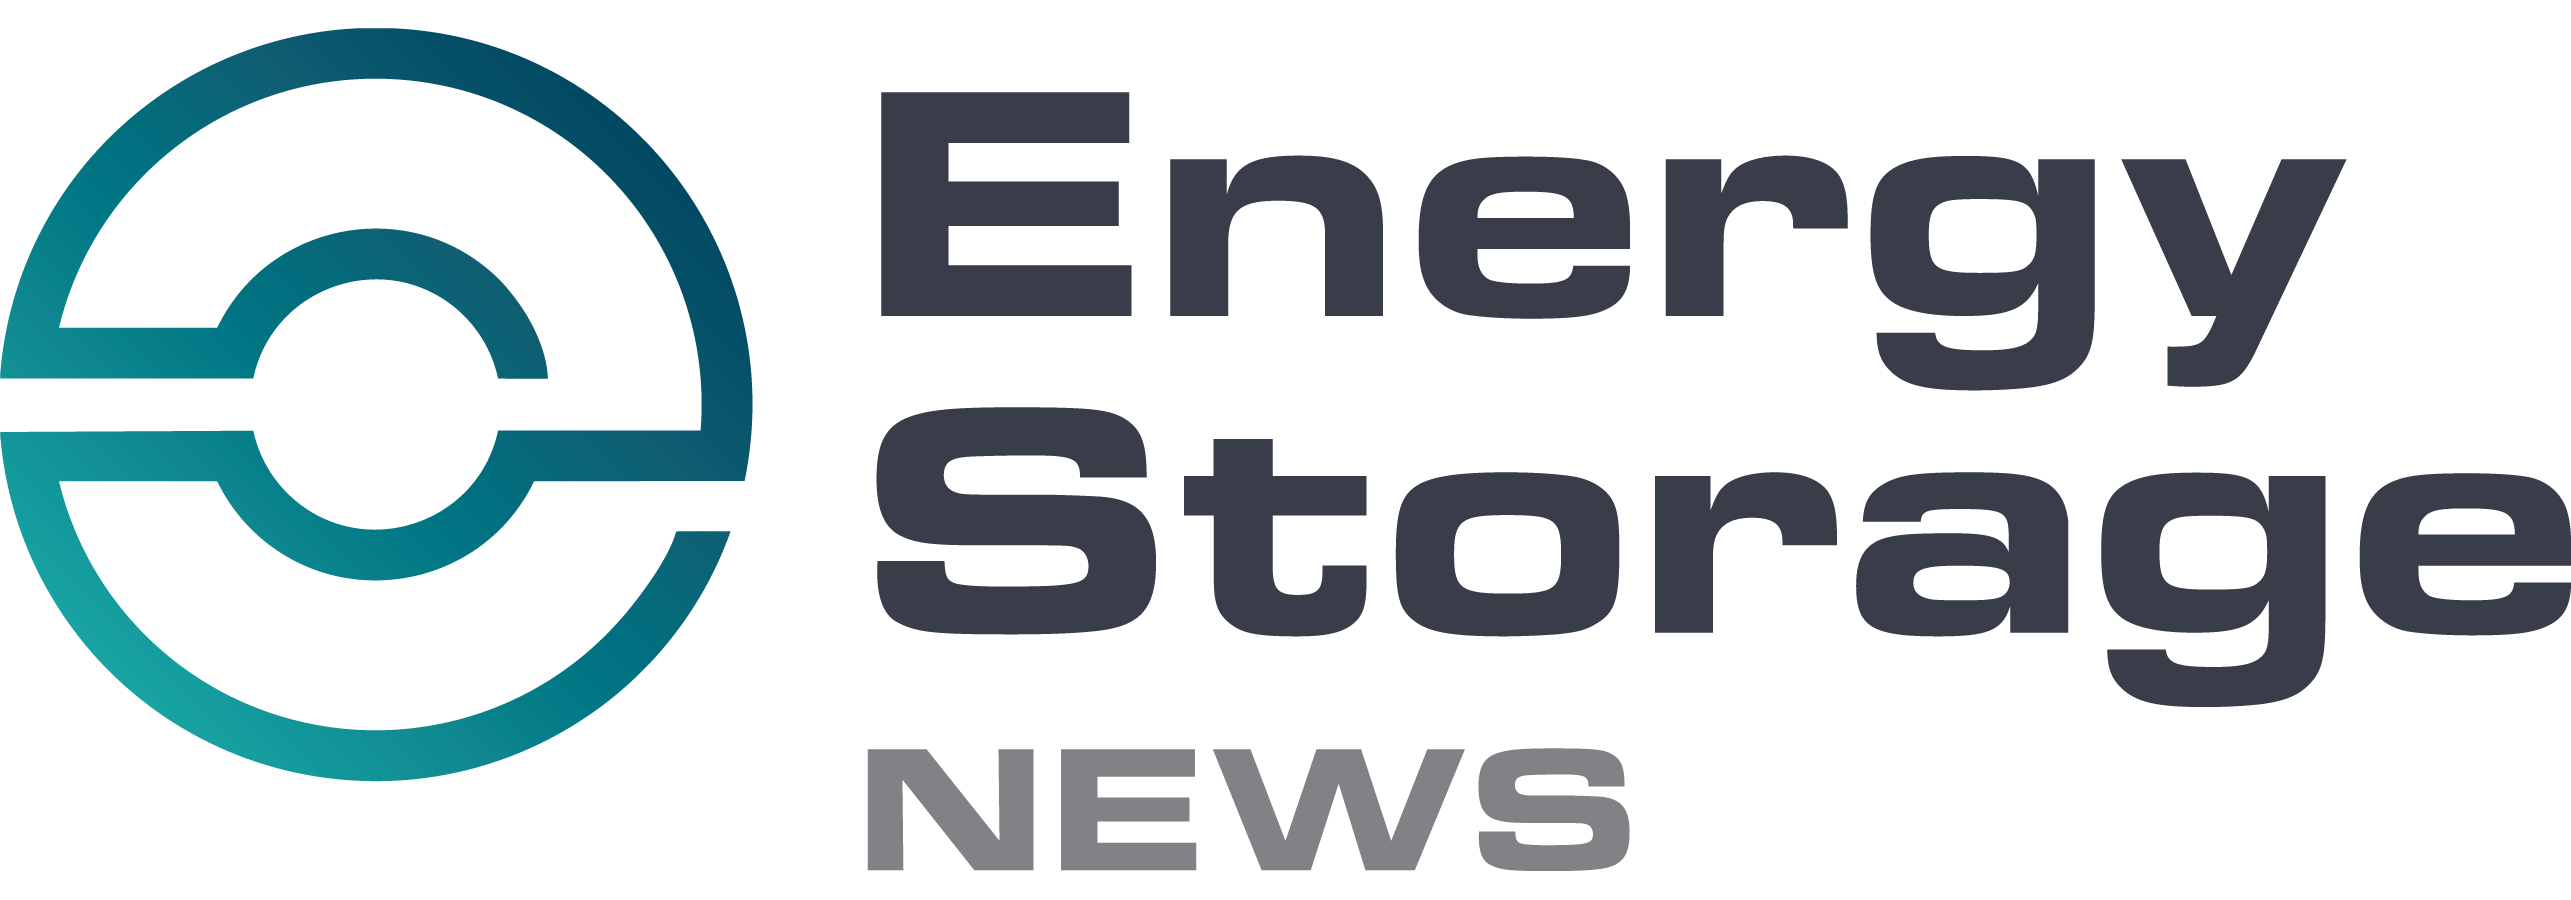 Energy-Storage.news logo